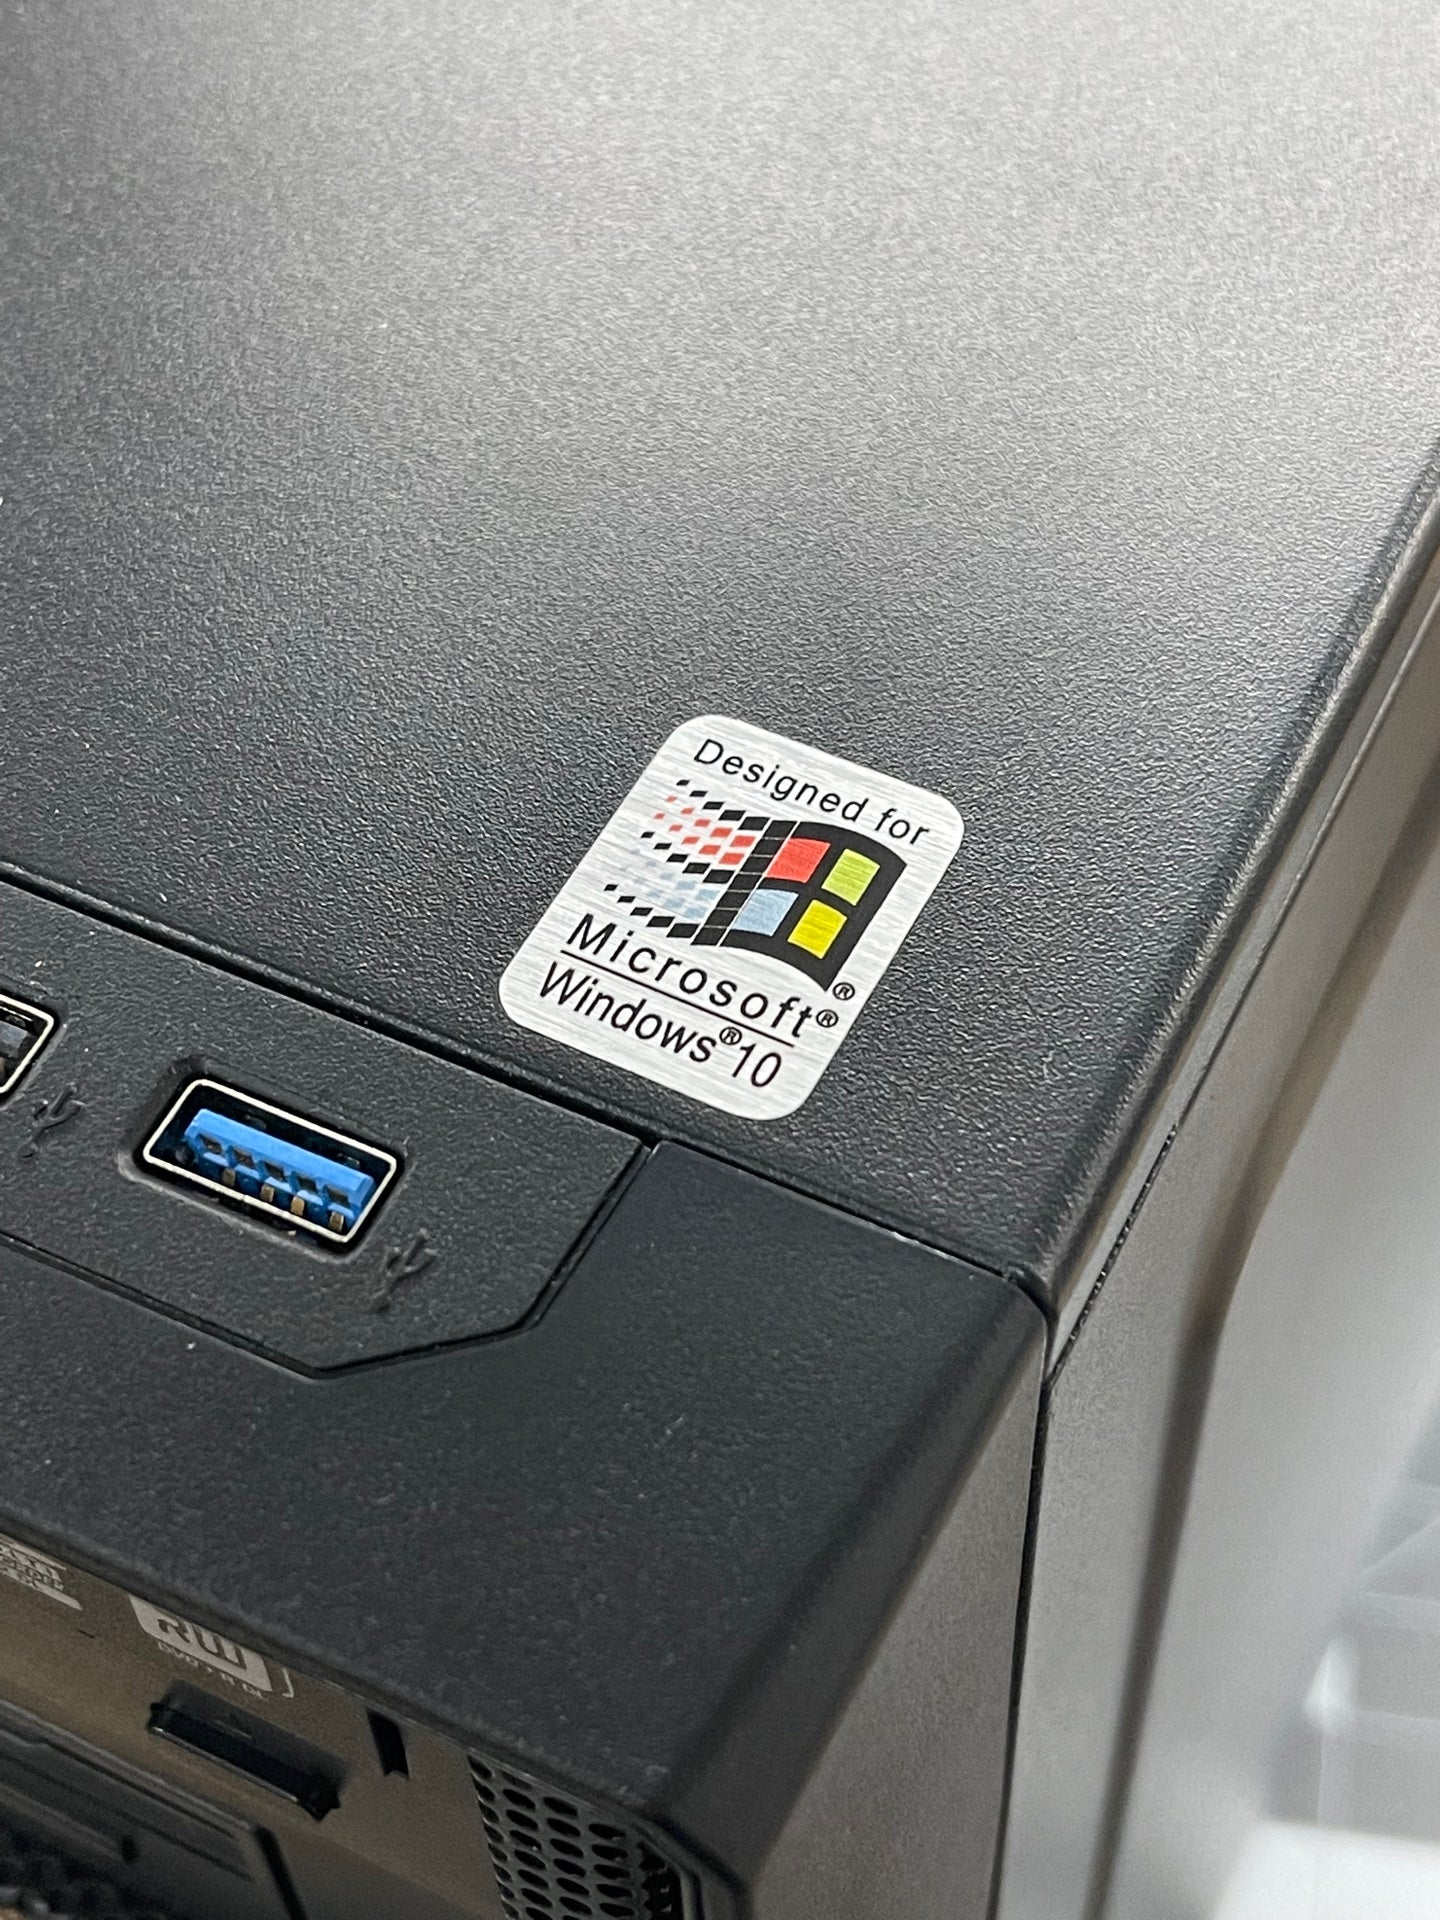 Windows 10 Case Badge Sticker  - Metallic